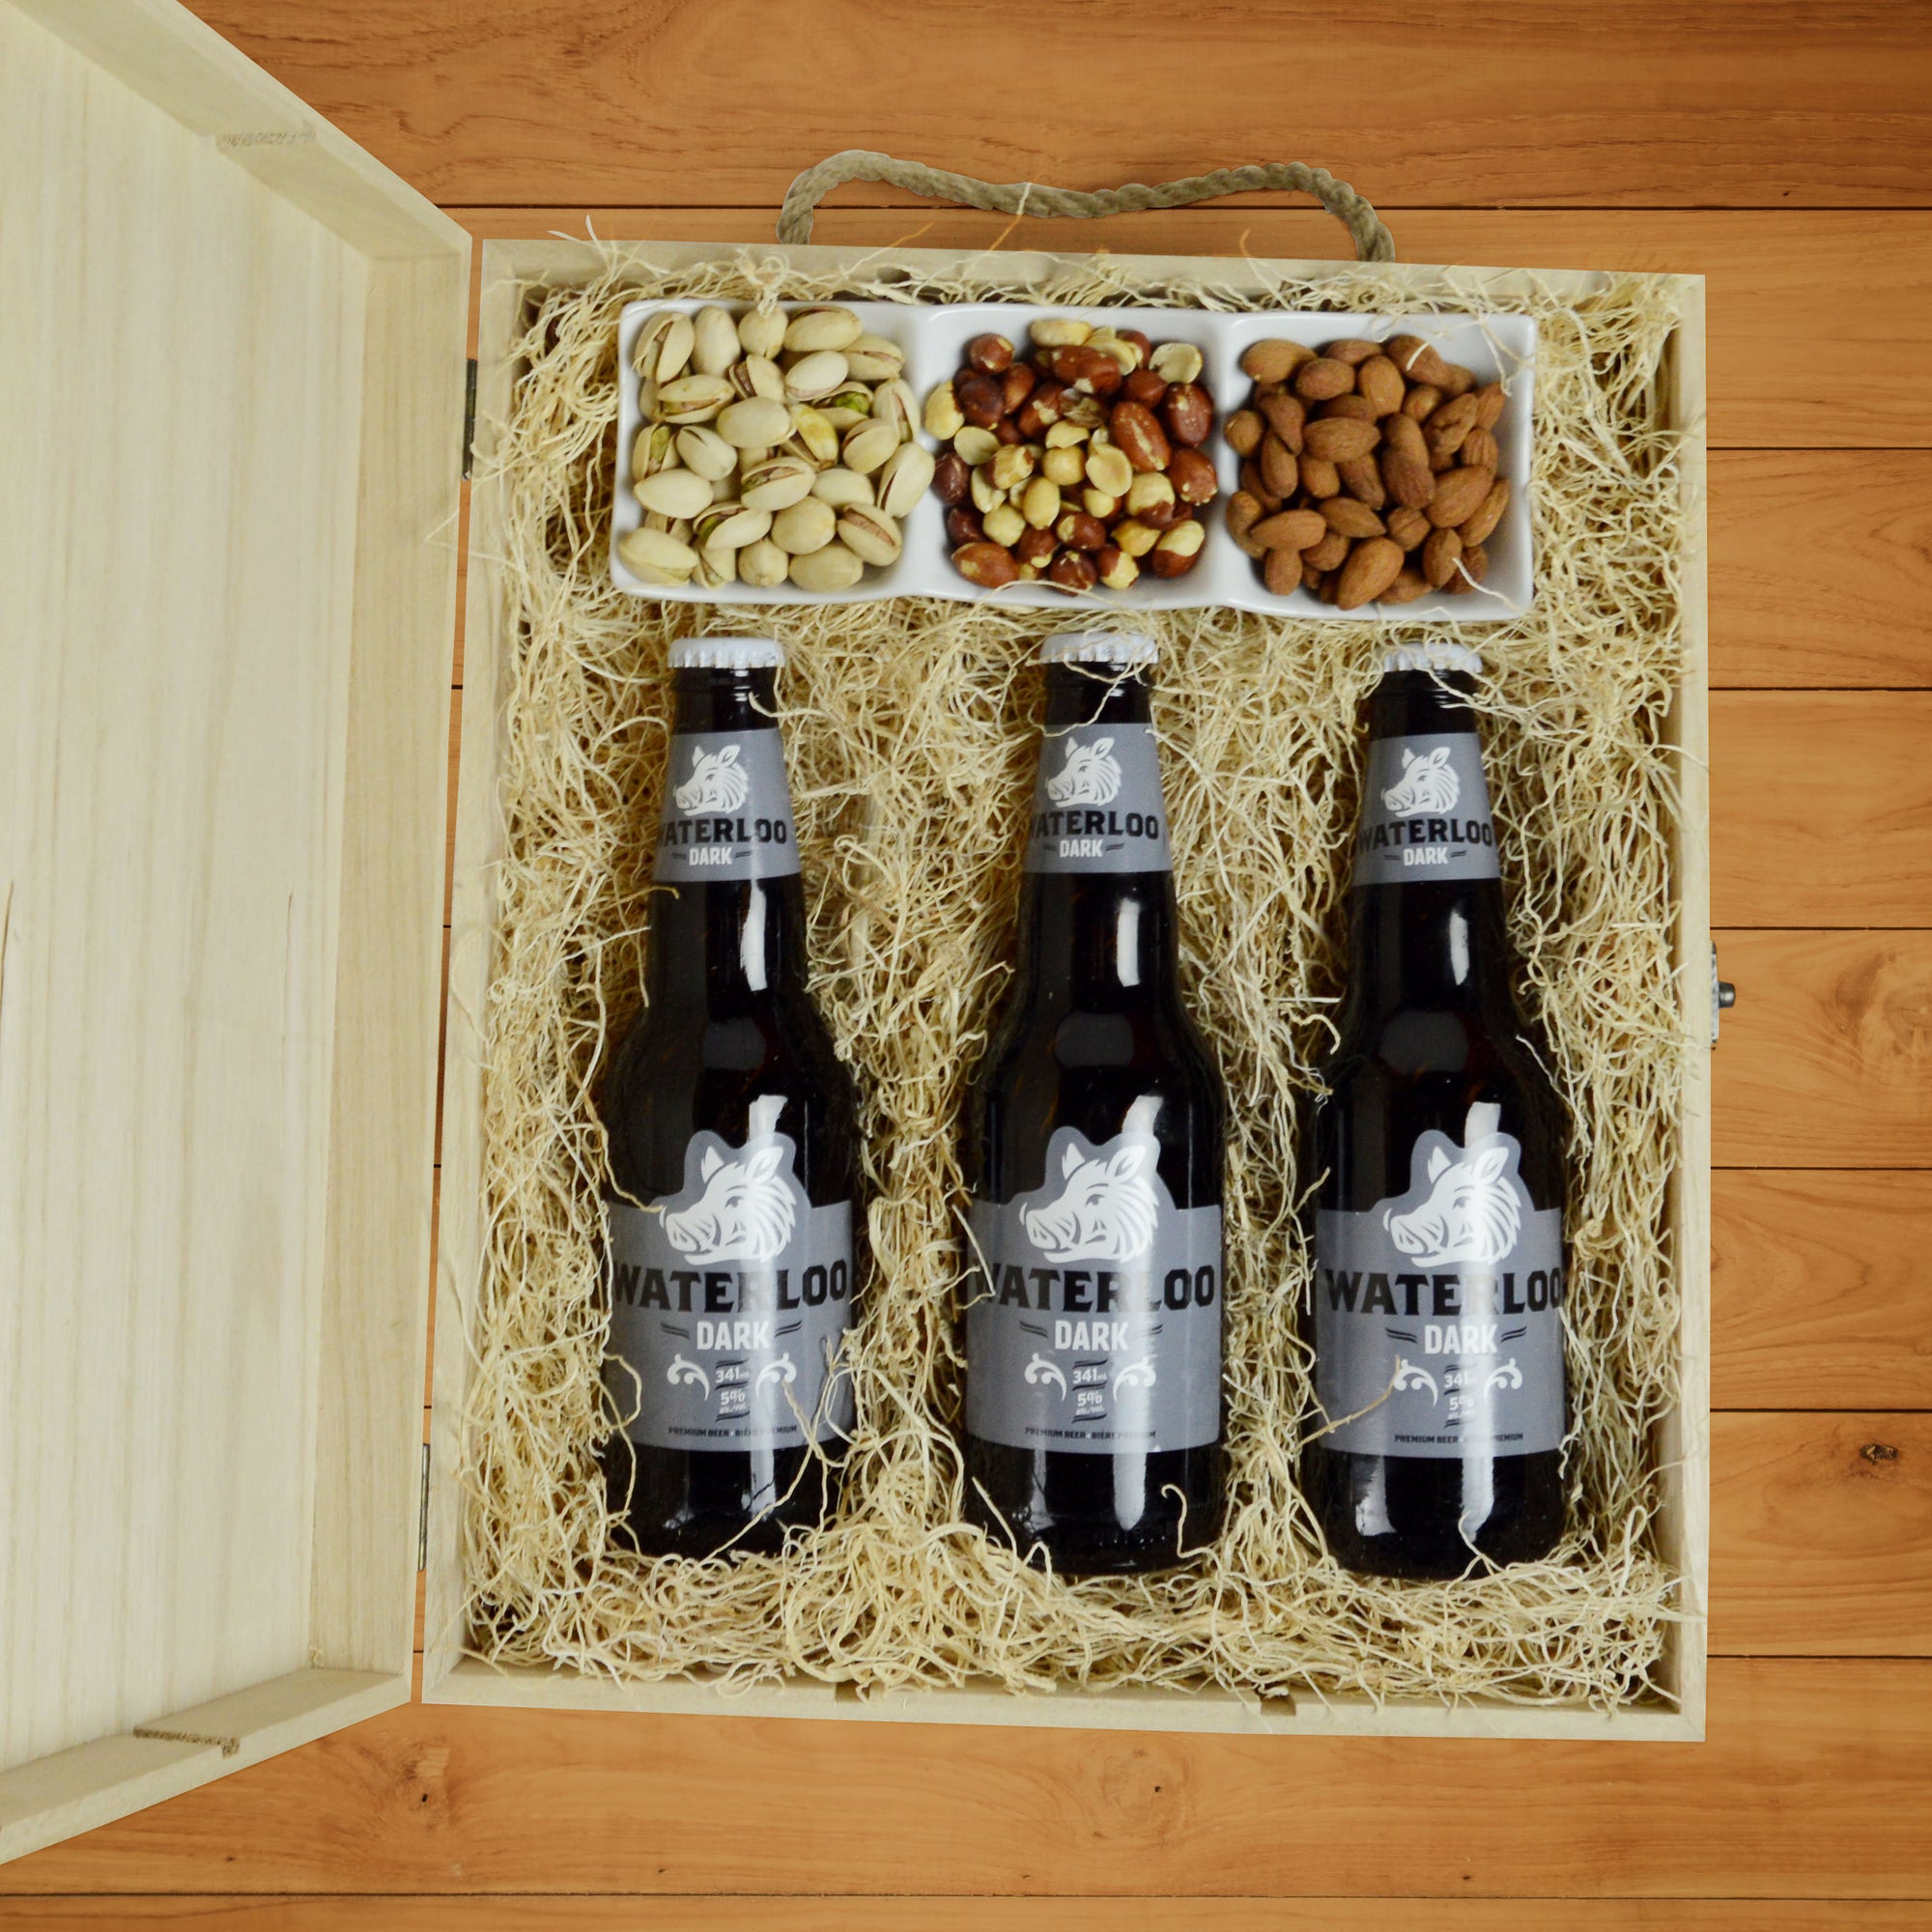 Beer Box Gift Set